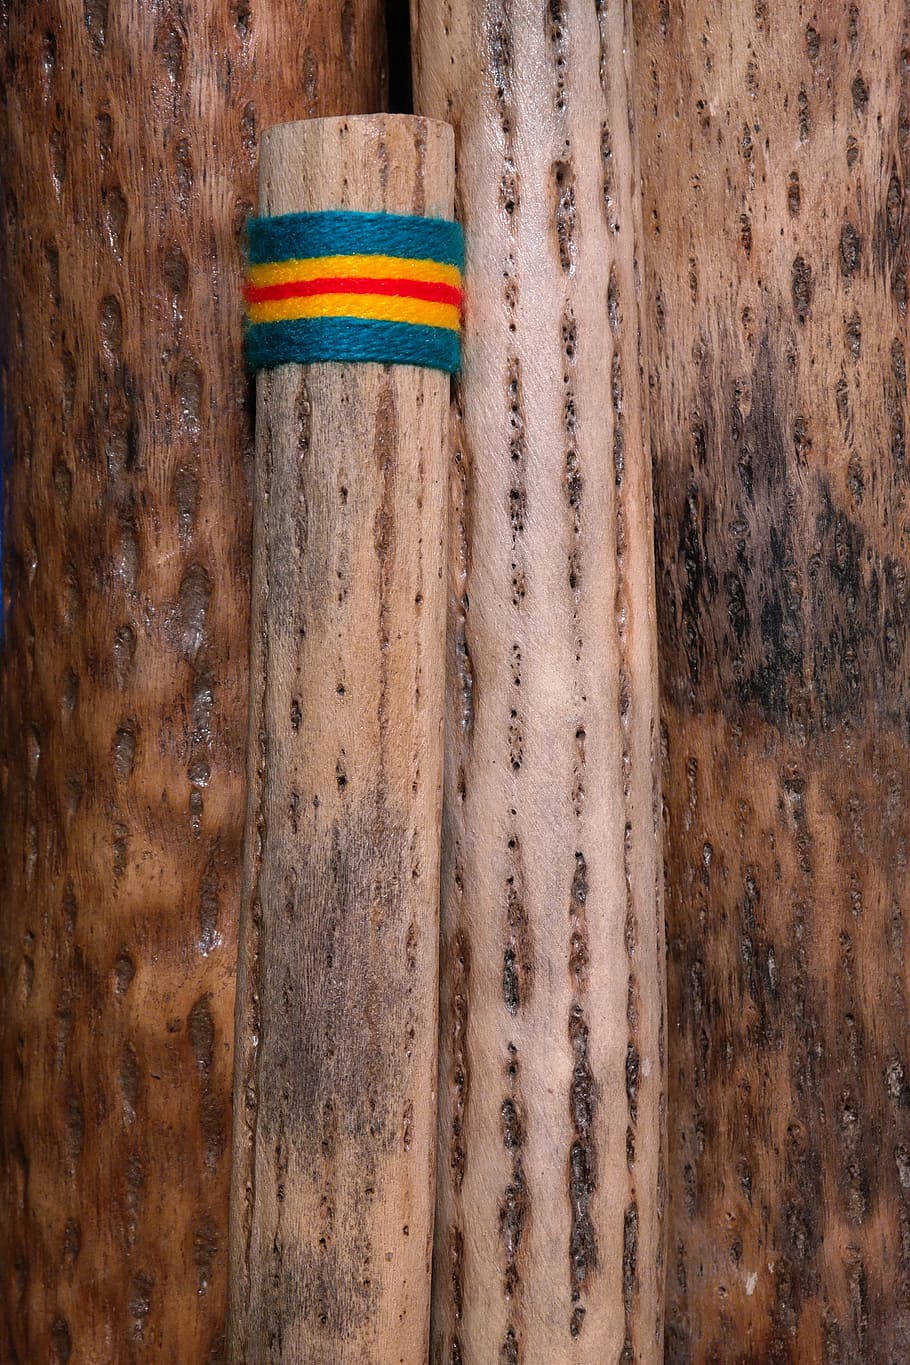 rainmaker, rain bar, rain stick, effect instrument, tube-shaped container rattle, vessel rattle, rattle, didgeridoo, overtone empire, wind instrument